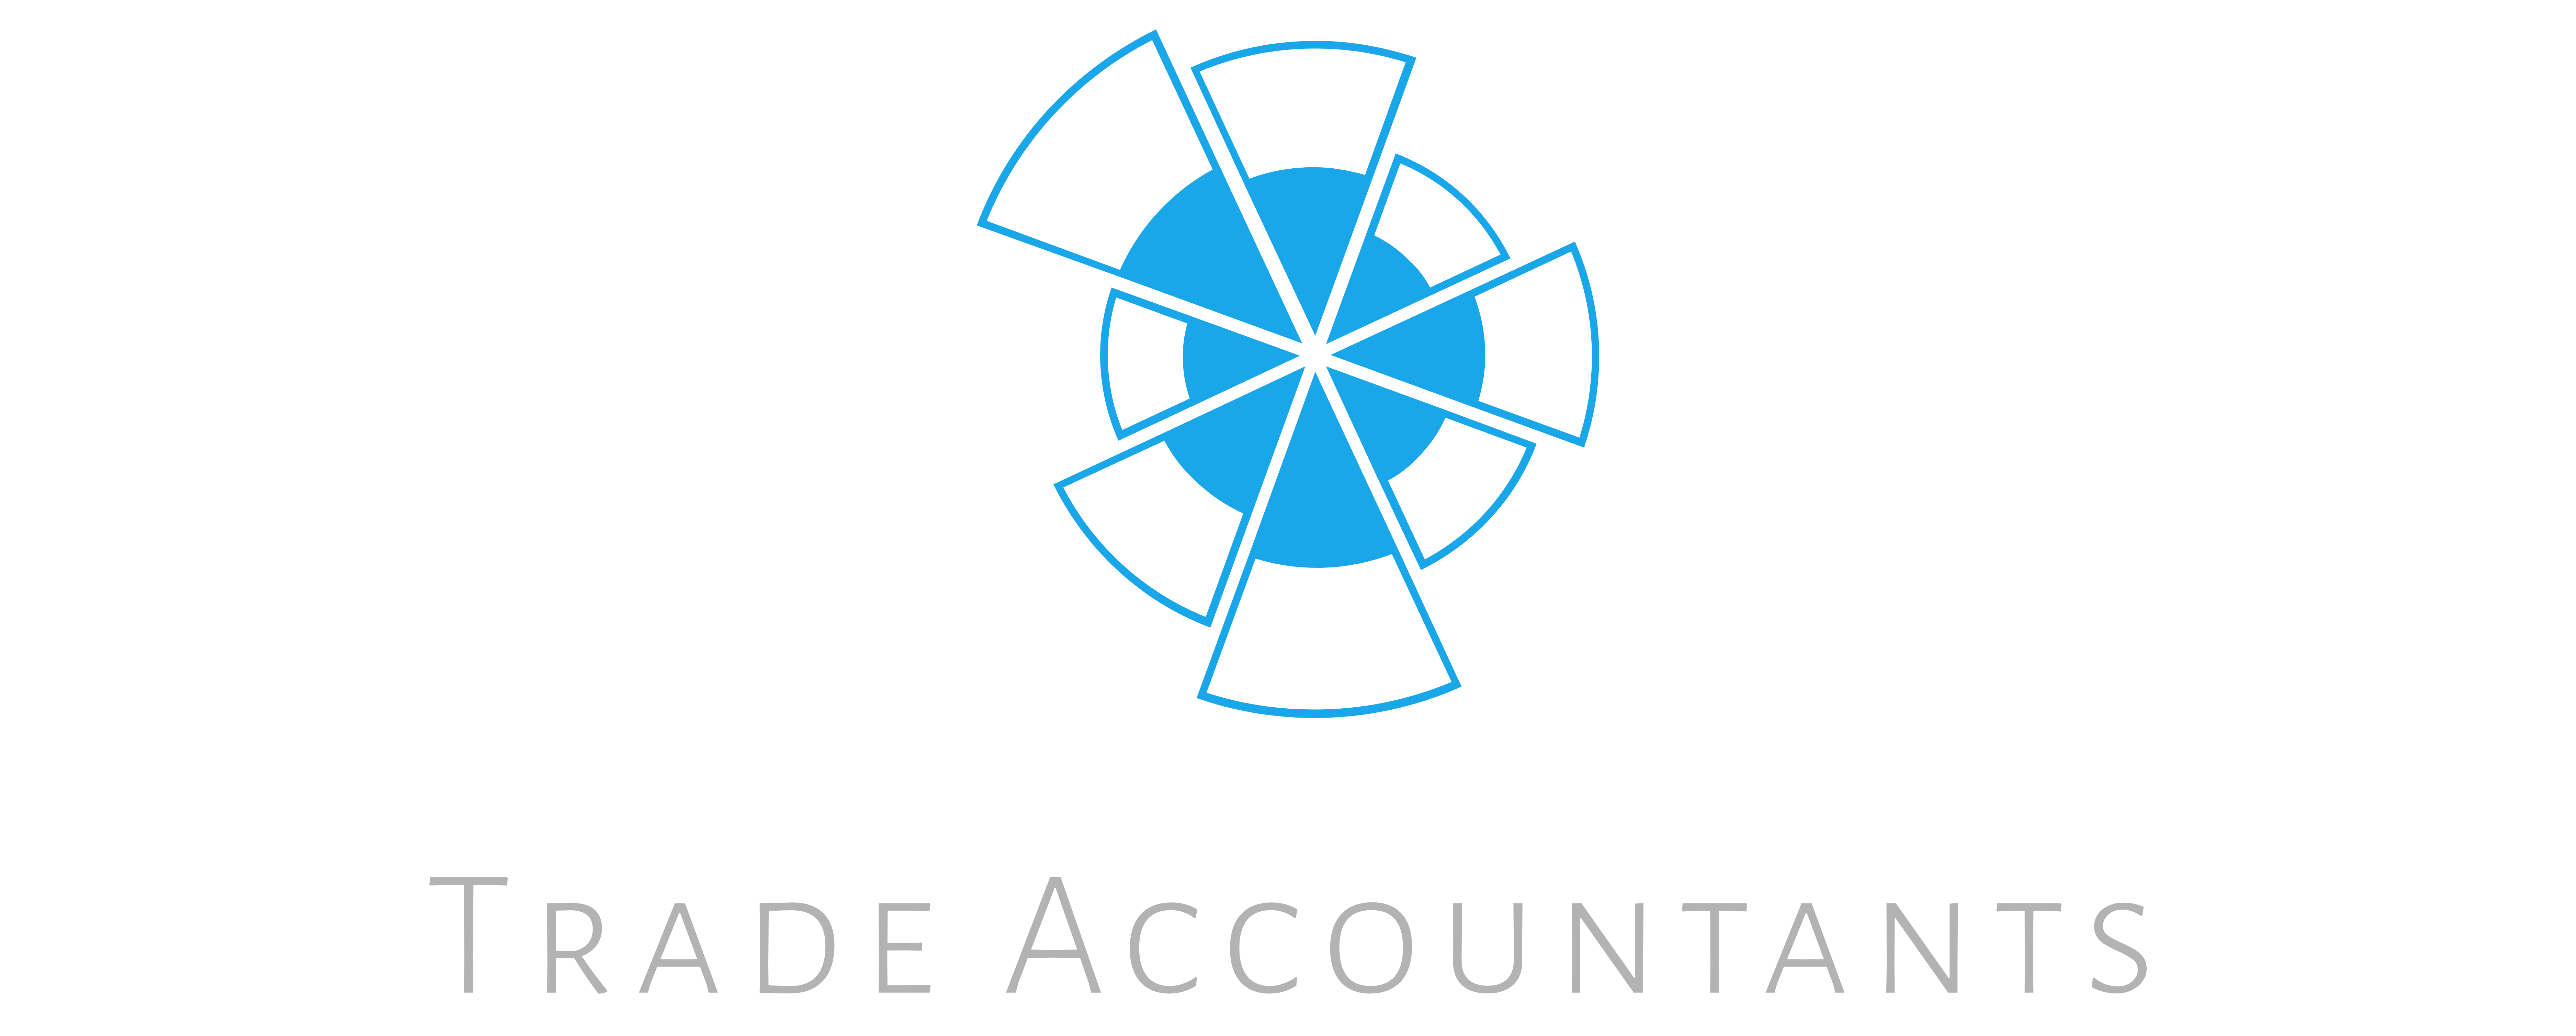 Trade Accountants